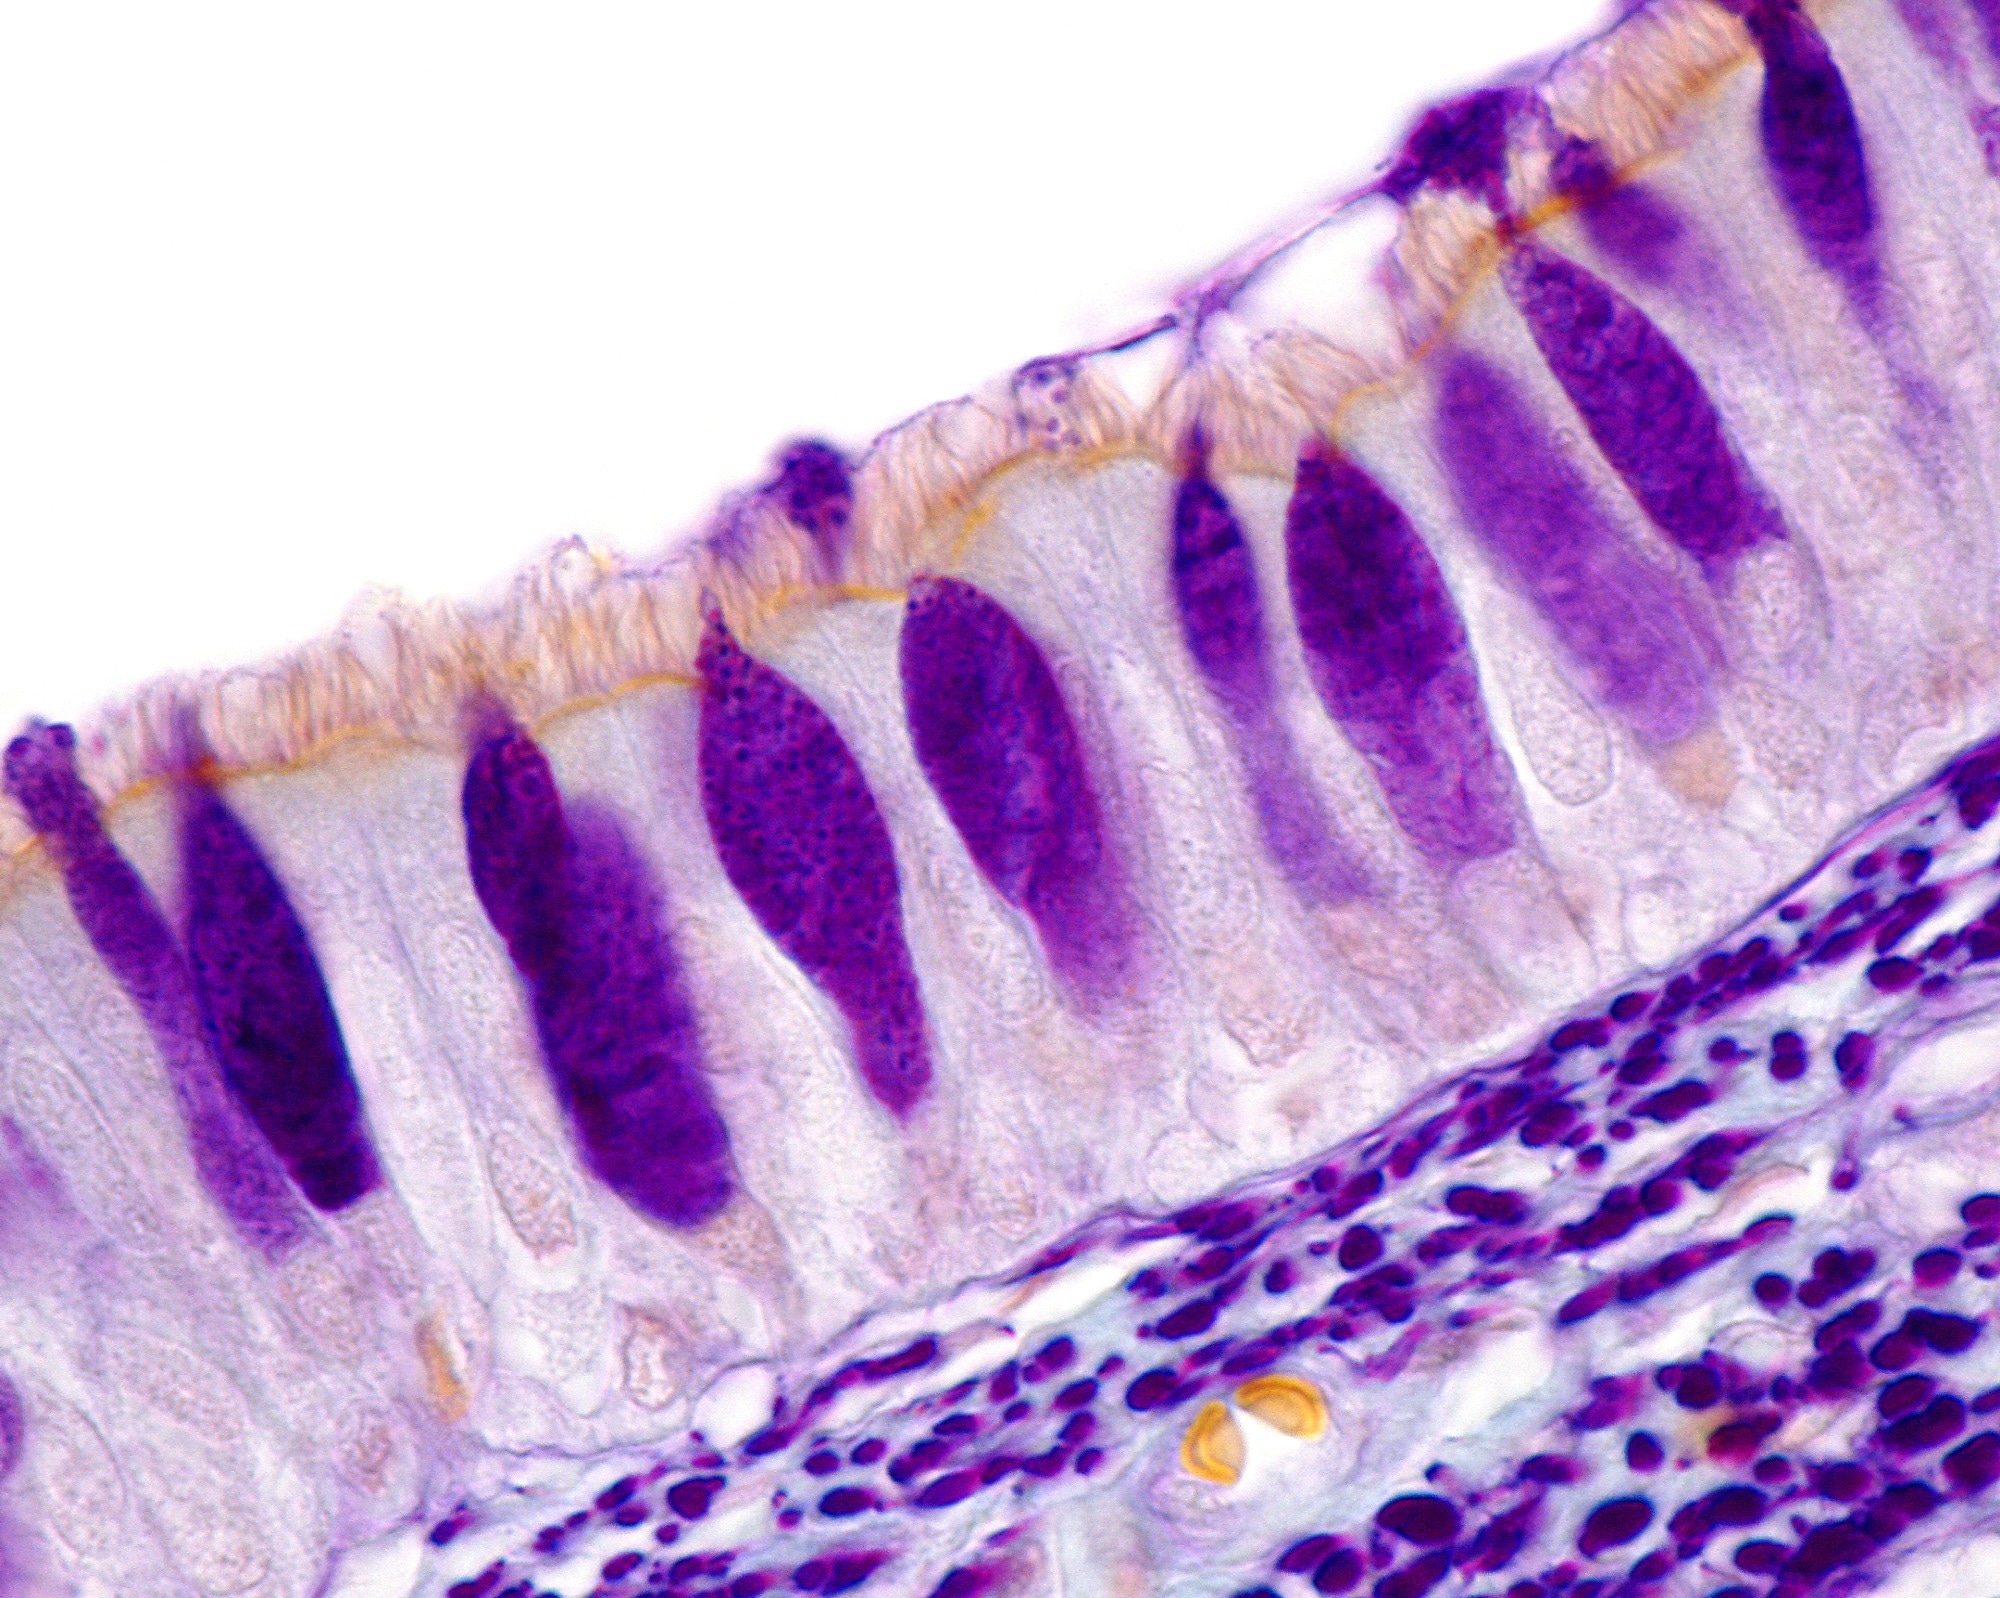 Study: Scanning electron microscopy of human islet cilia. Image Credit: Jose Luis Calvo / Shutterstock.com